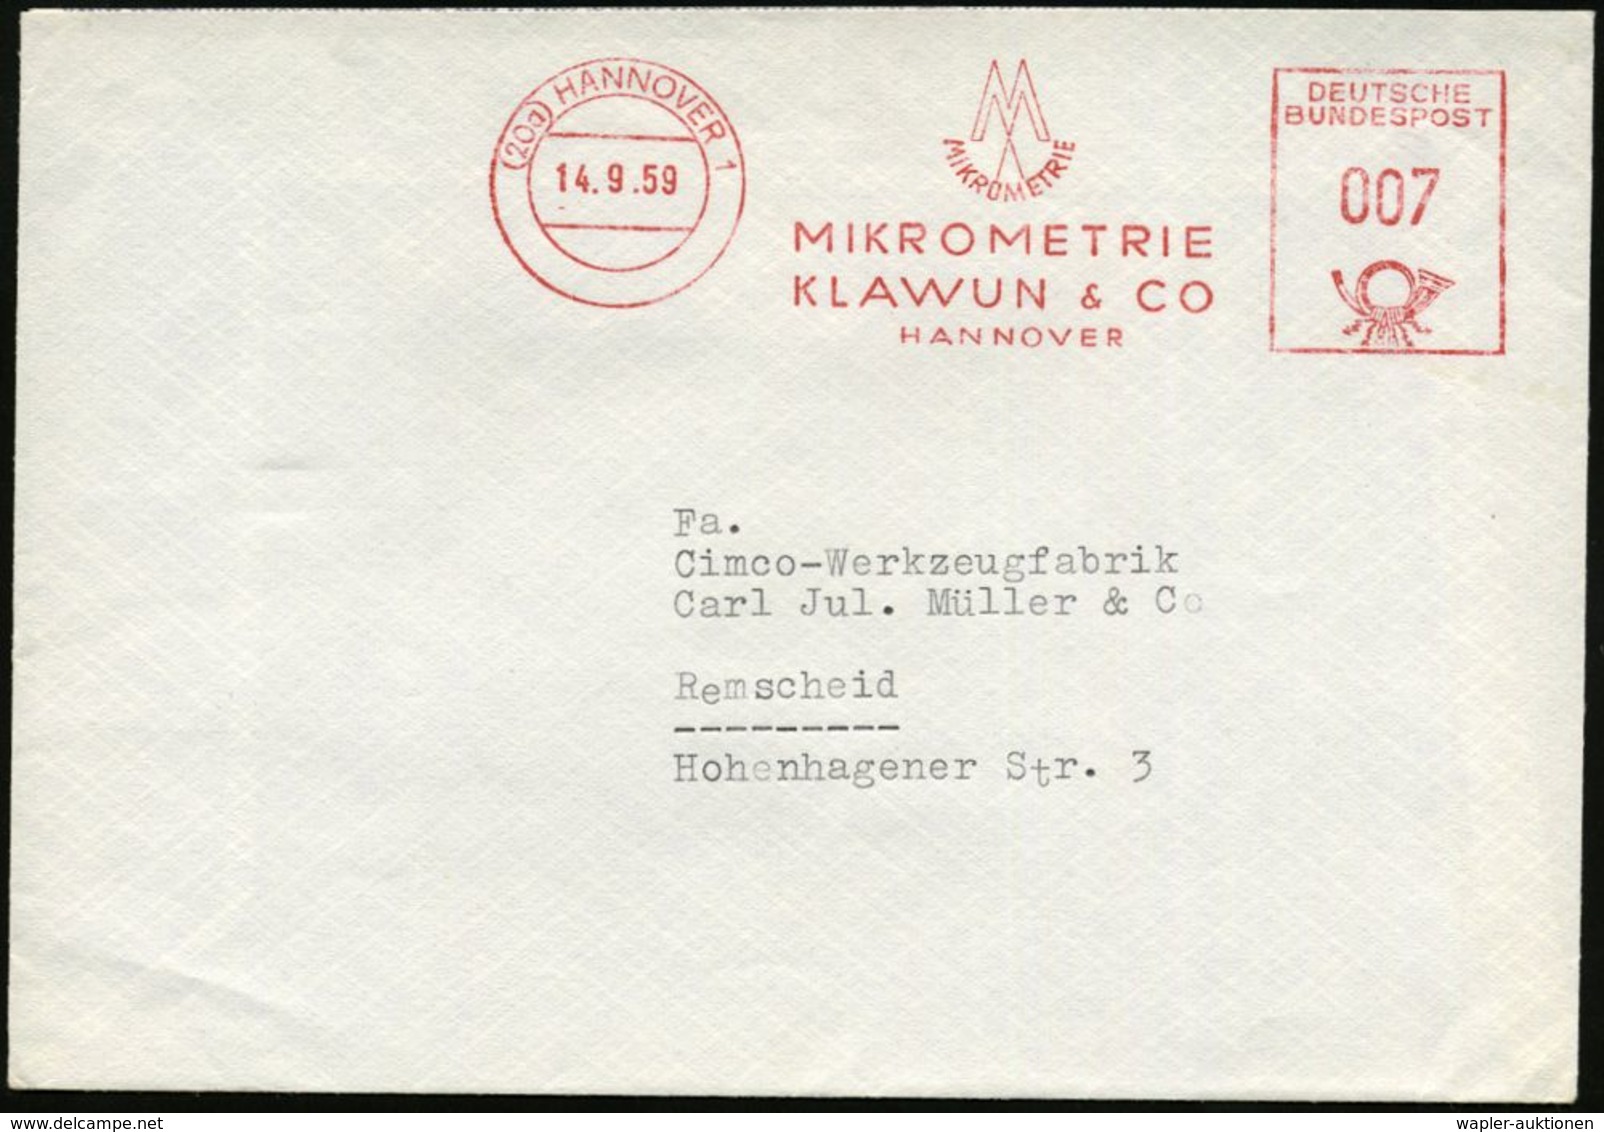 MATHEMATIK / RECHNEN / ZAHLEN / GEOMETRIE : (20a) HANNOVER 1/ MIKROMETRIE/ KLAWUN & CO 1959 (14.9.) AFS (Monogramm-Logo) - Unclassified